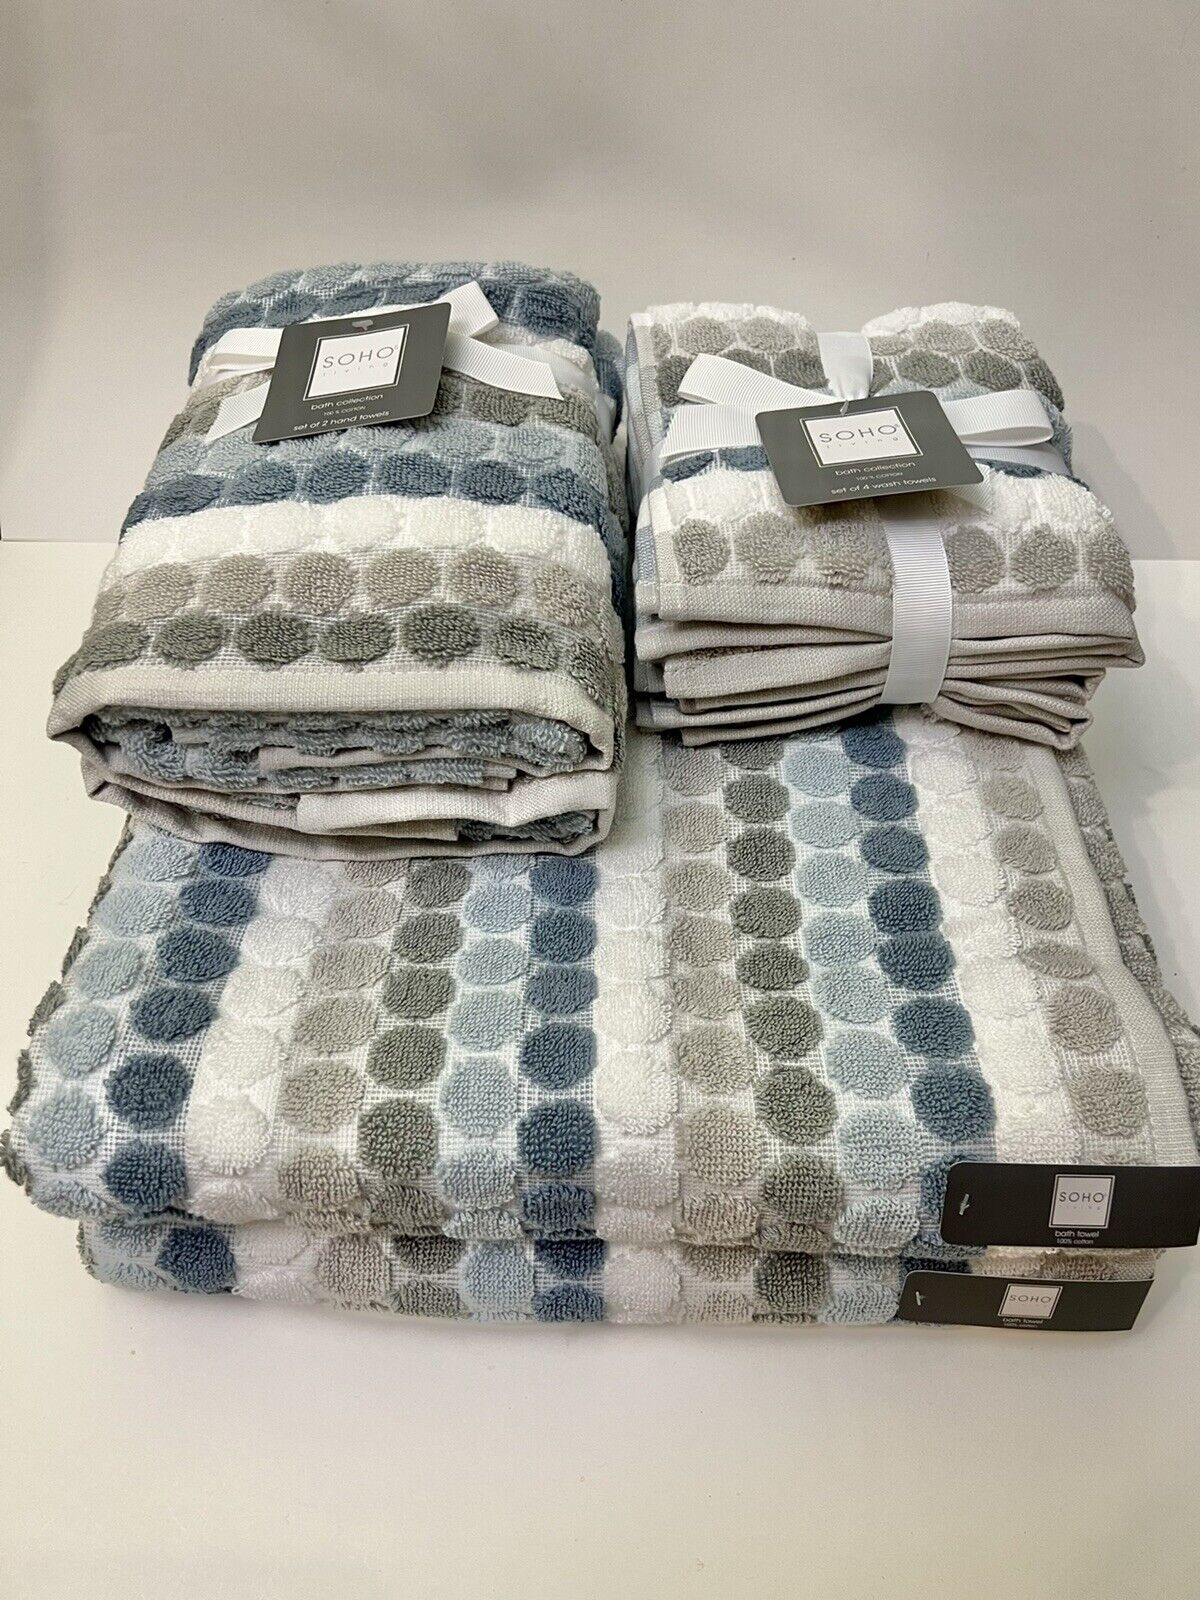 Soho Living 2 Bath 2 Hand 4 Washcloth Towels Multicolored Dots 100% Cotton NWT